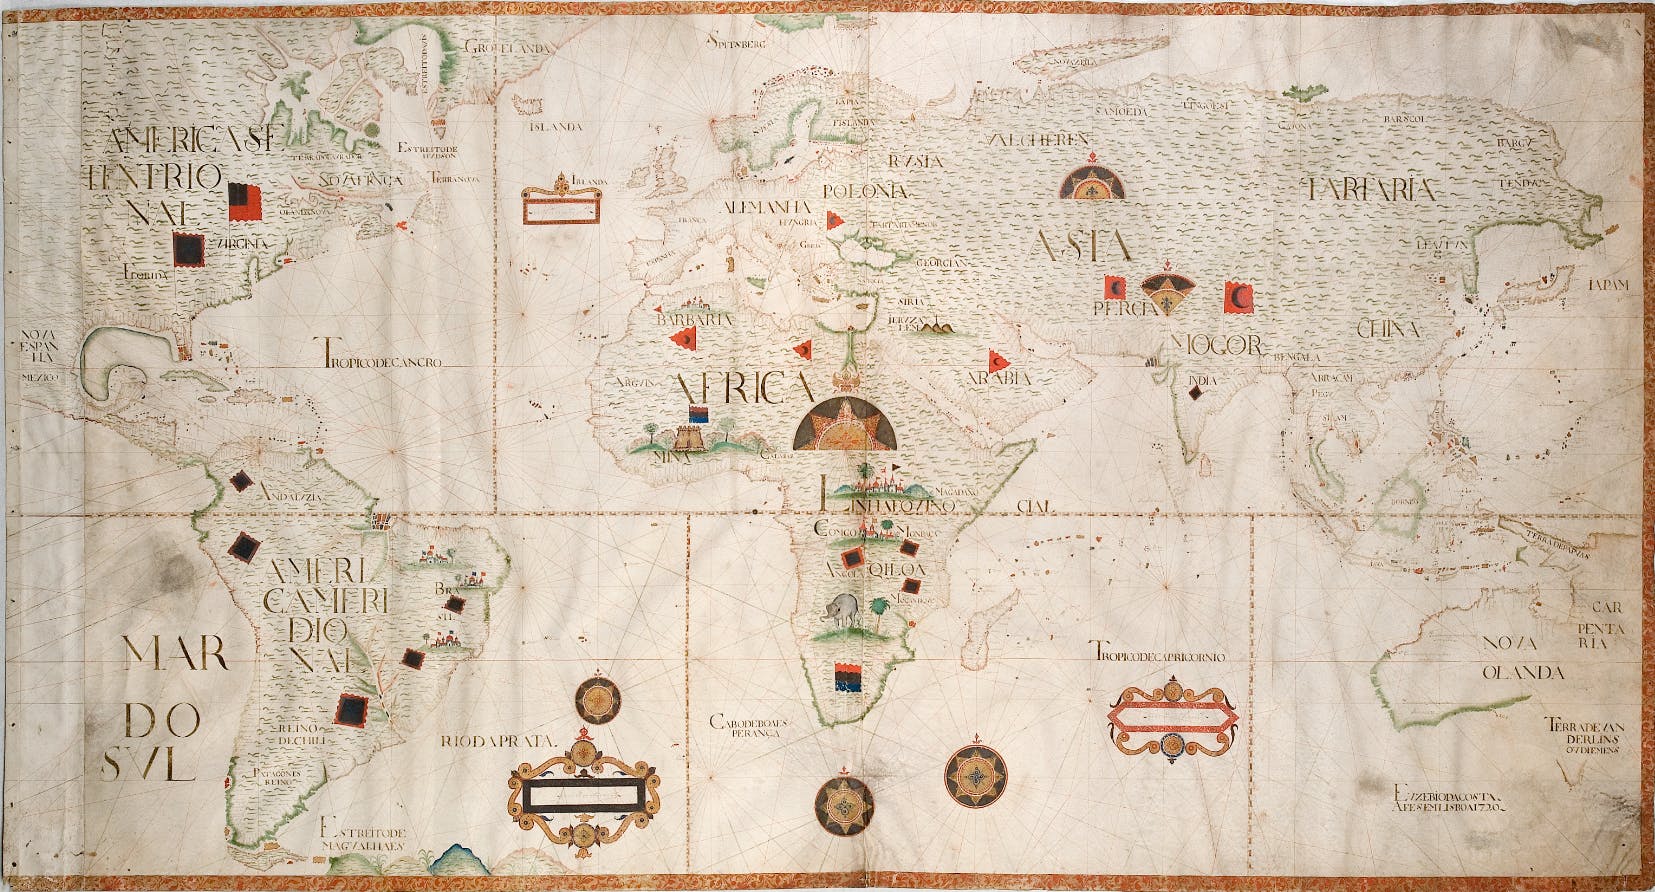 Mapa Mundi (1720), de Eusébio da Costa, cartógrafo - Museu da Marinha, Lisboa